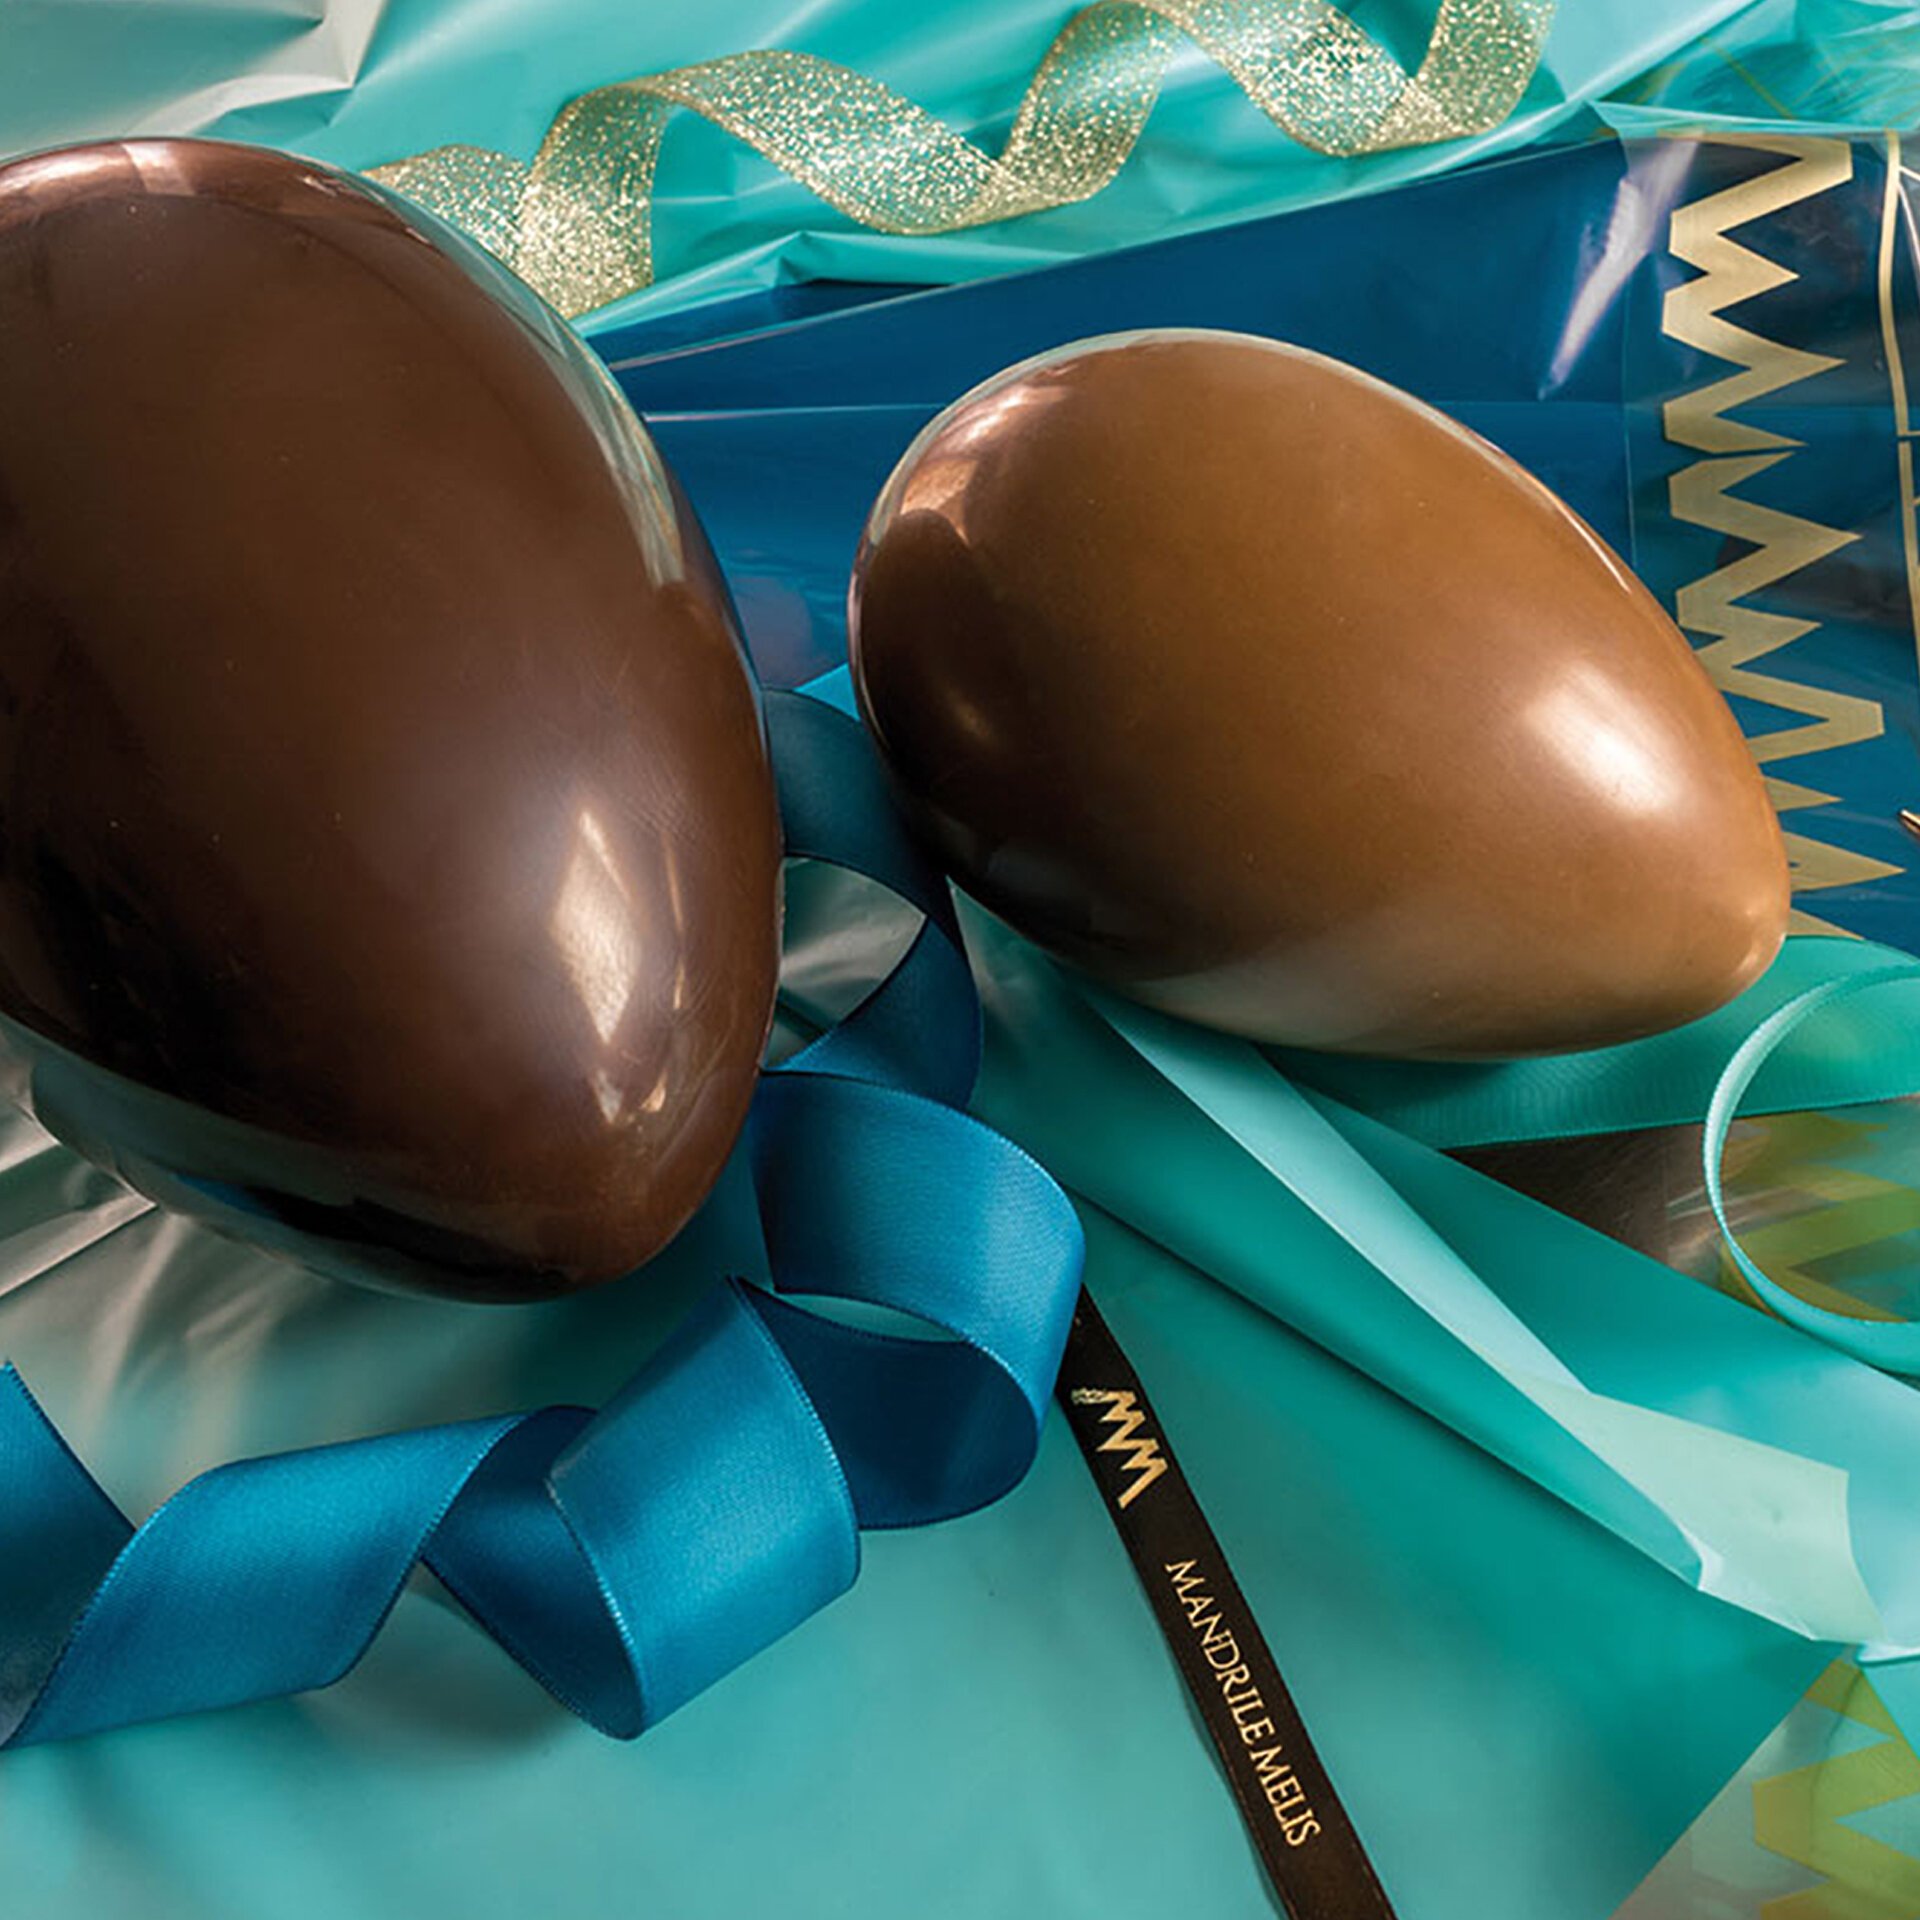 Dark Chocolate Egg - Tiffany Green Pack